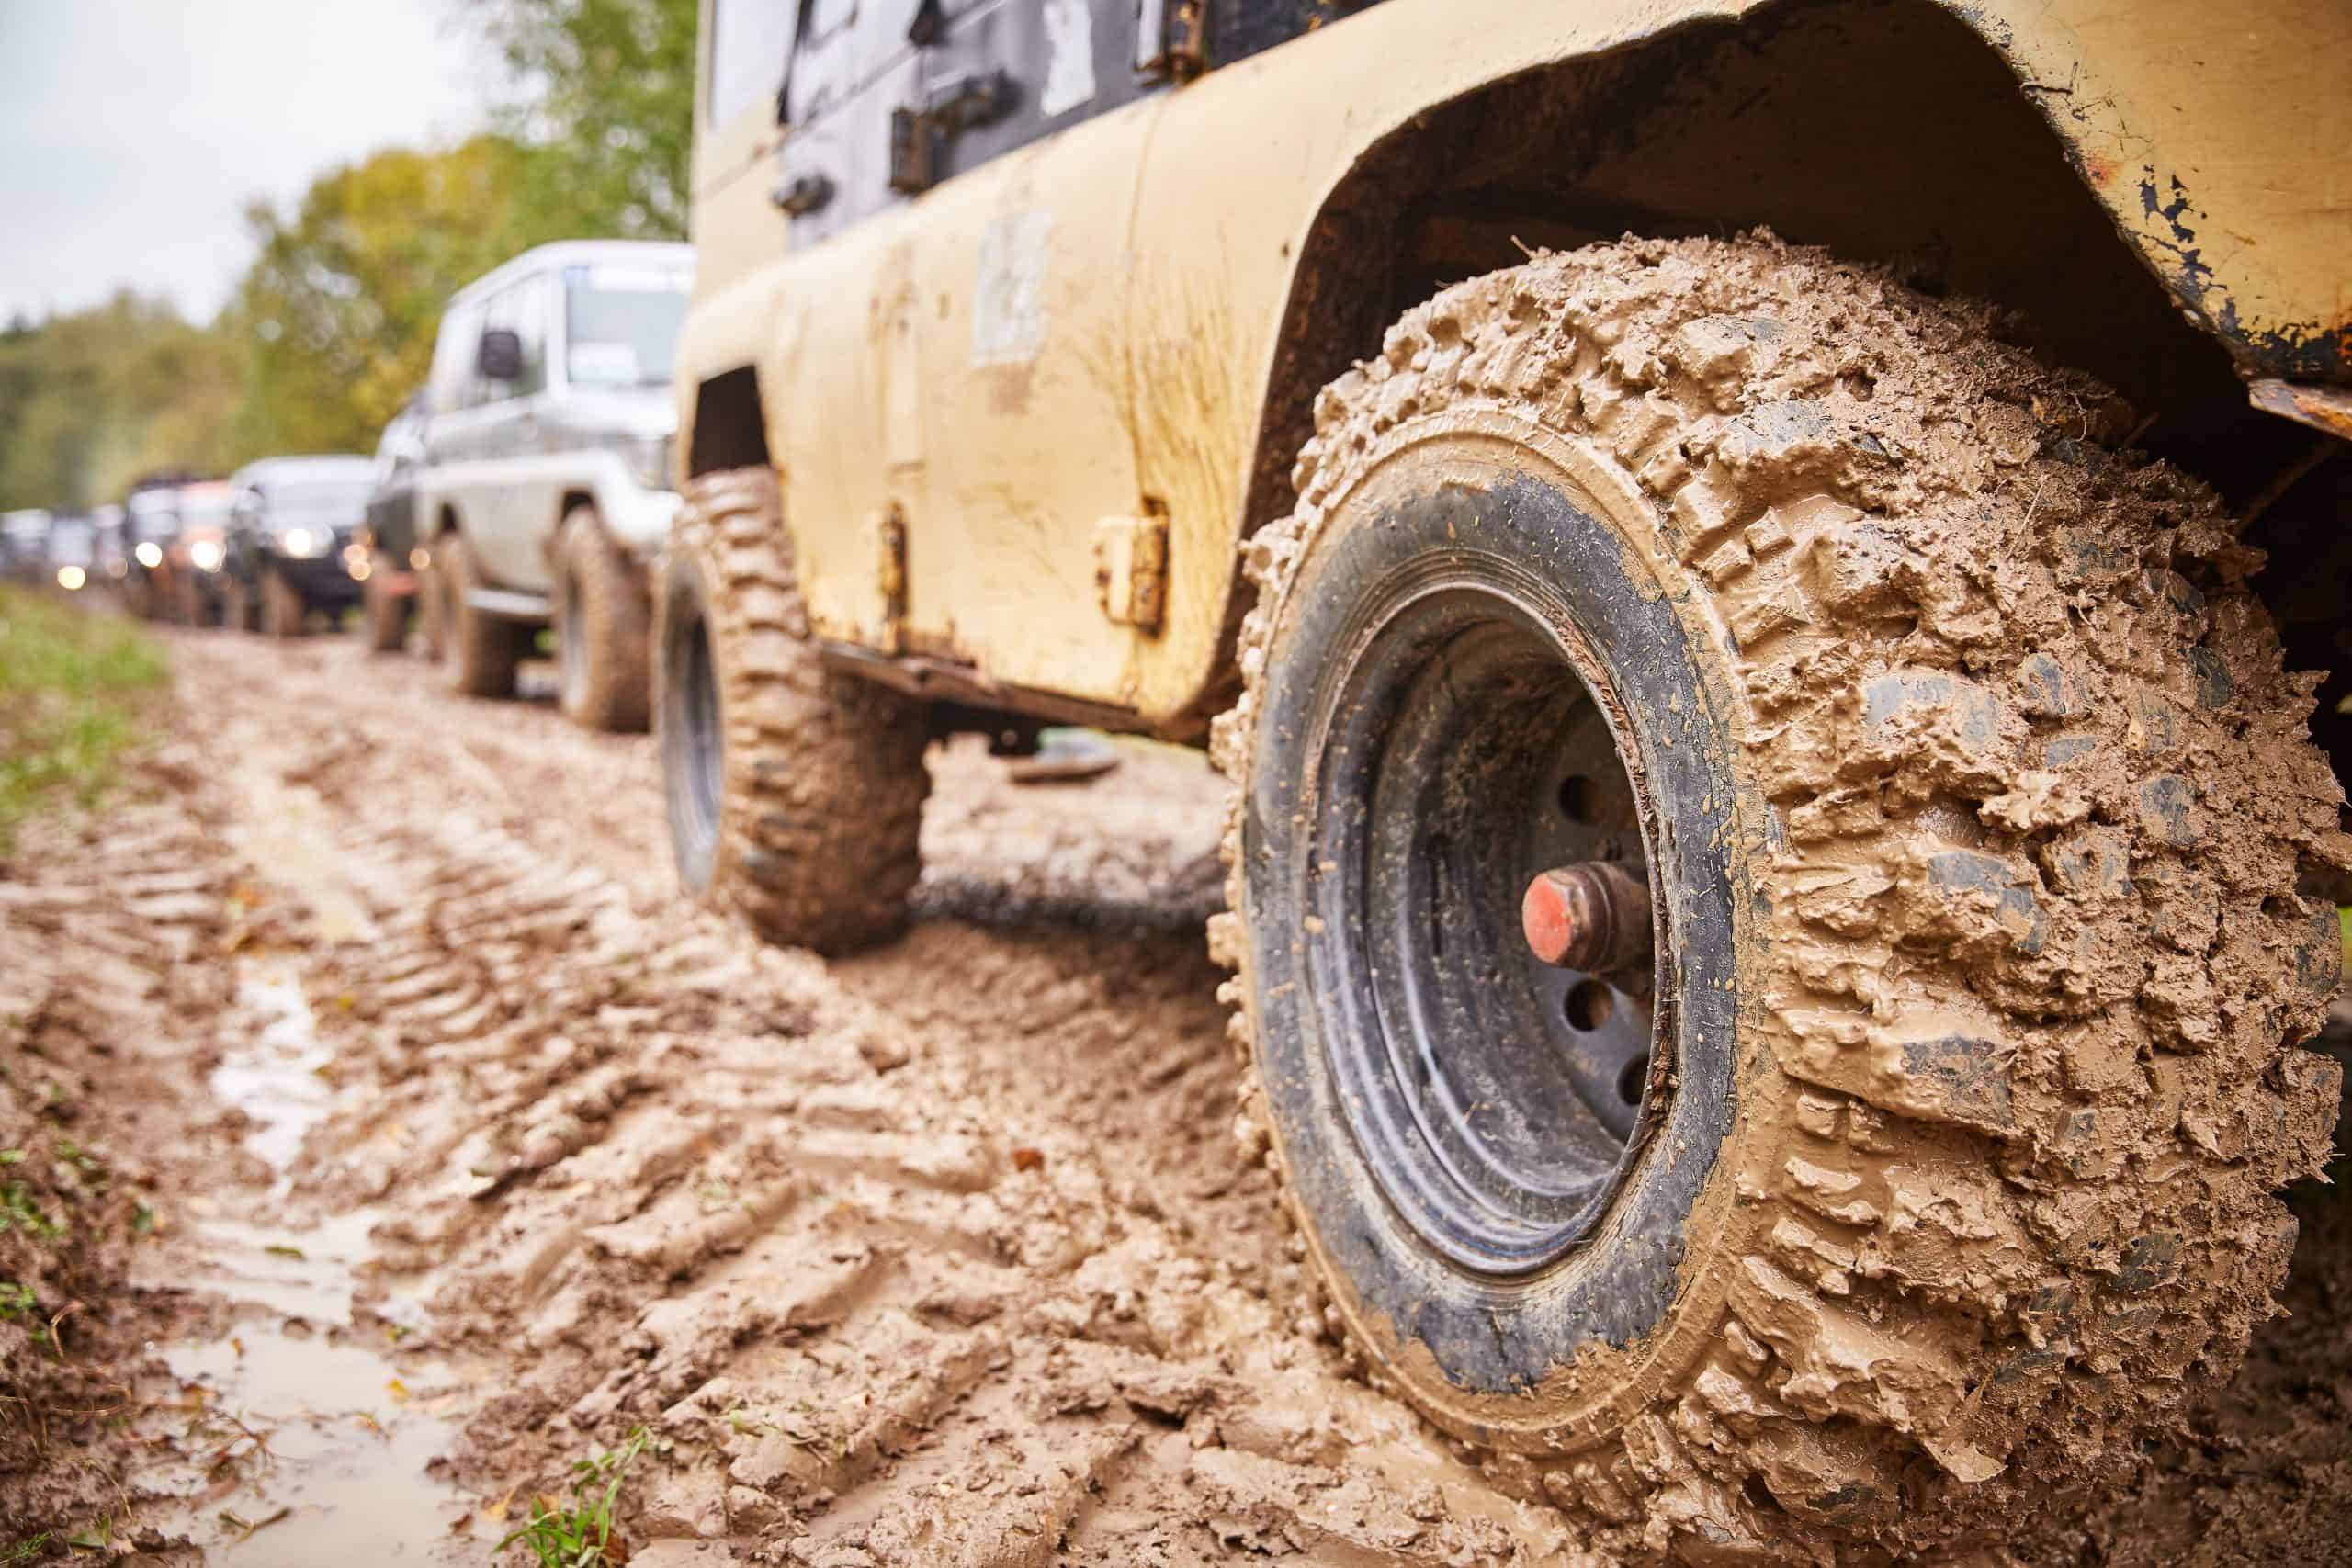 Top 10 Off-Road Mud Tires